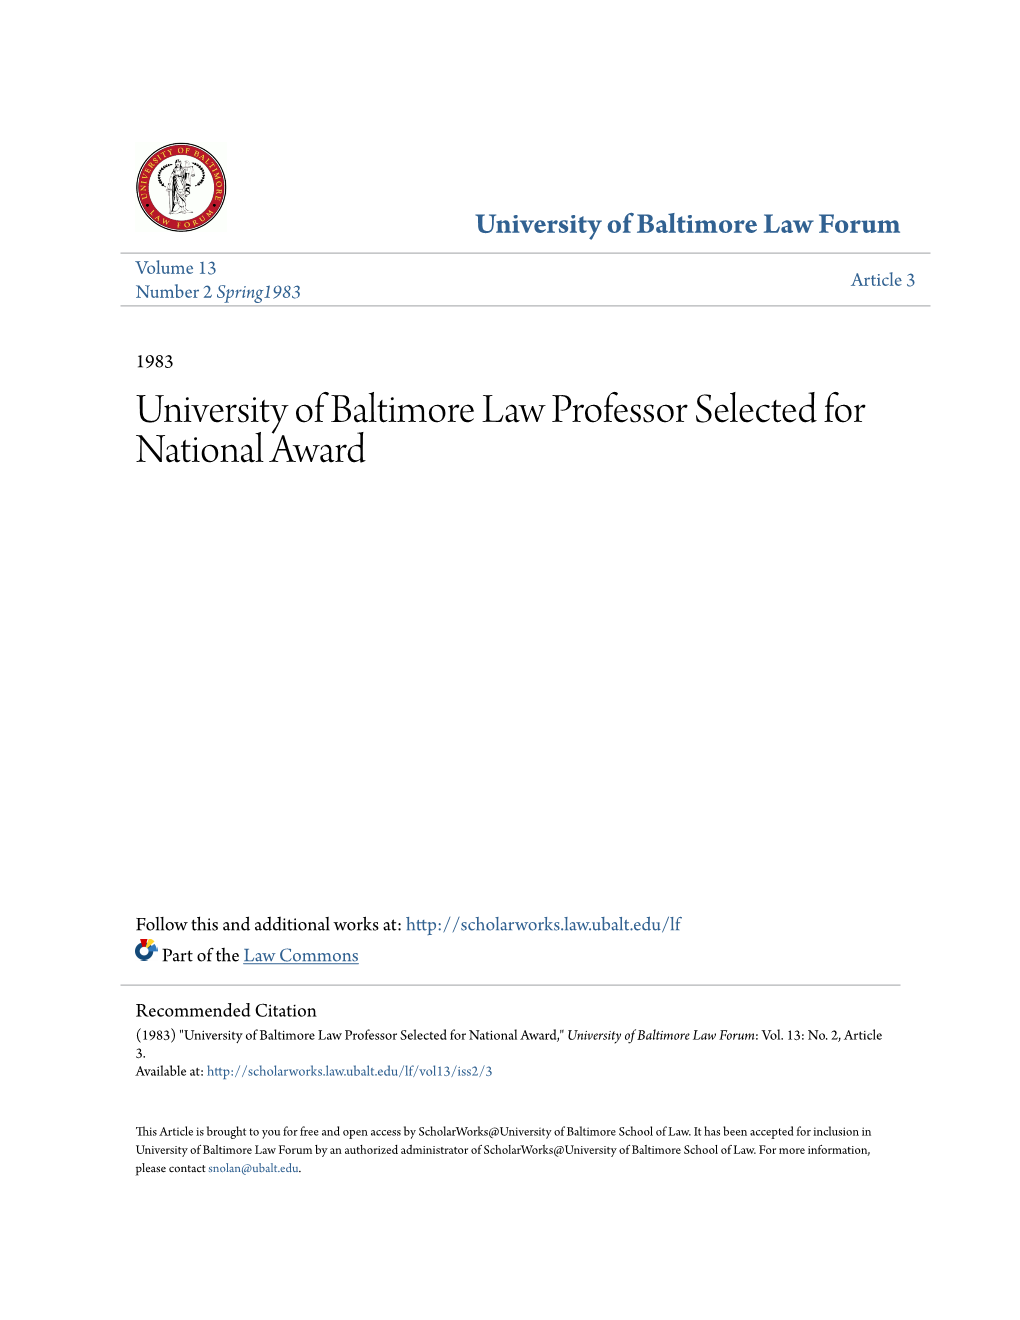 University of Baltimore Law Professor Selected for National Award